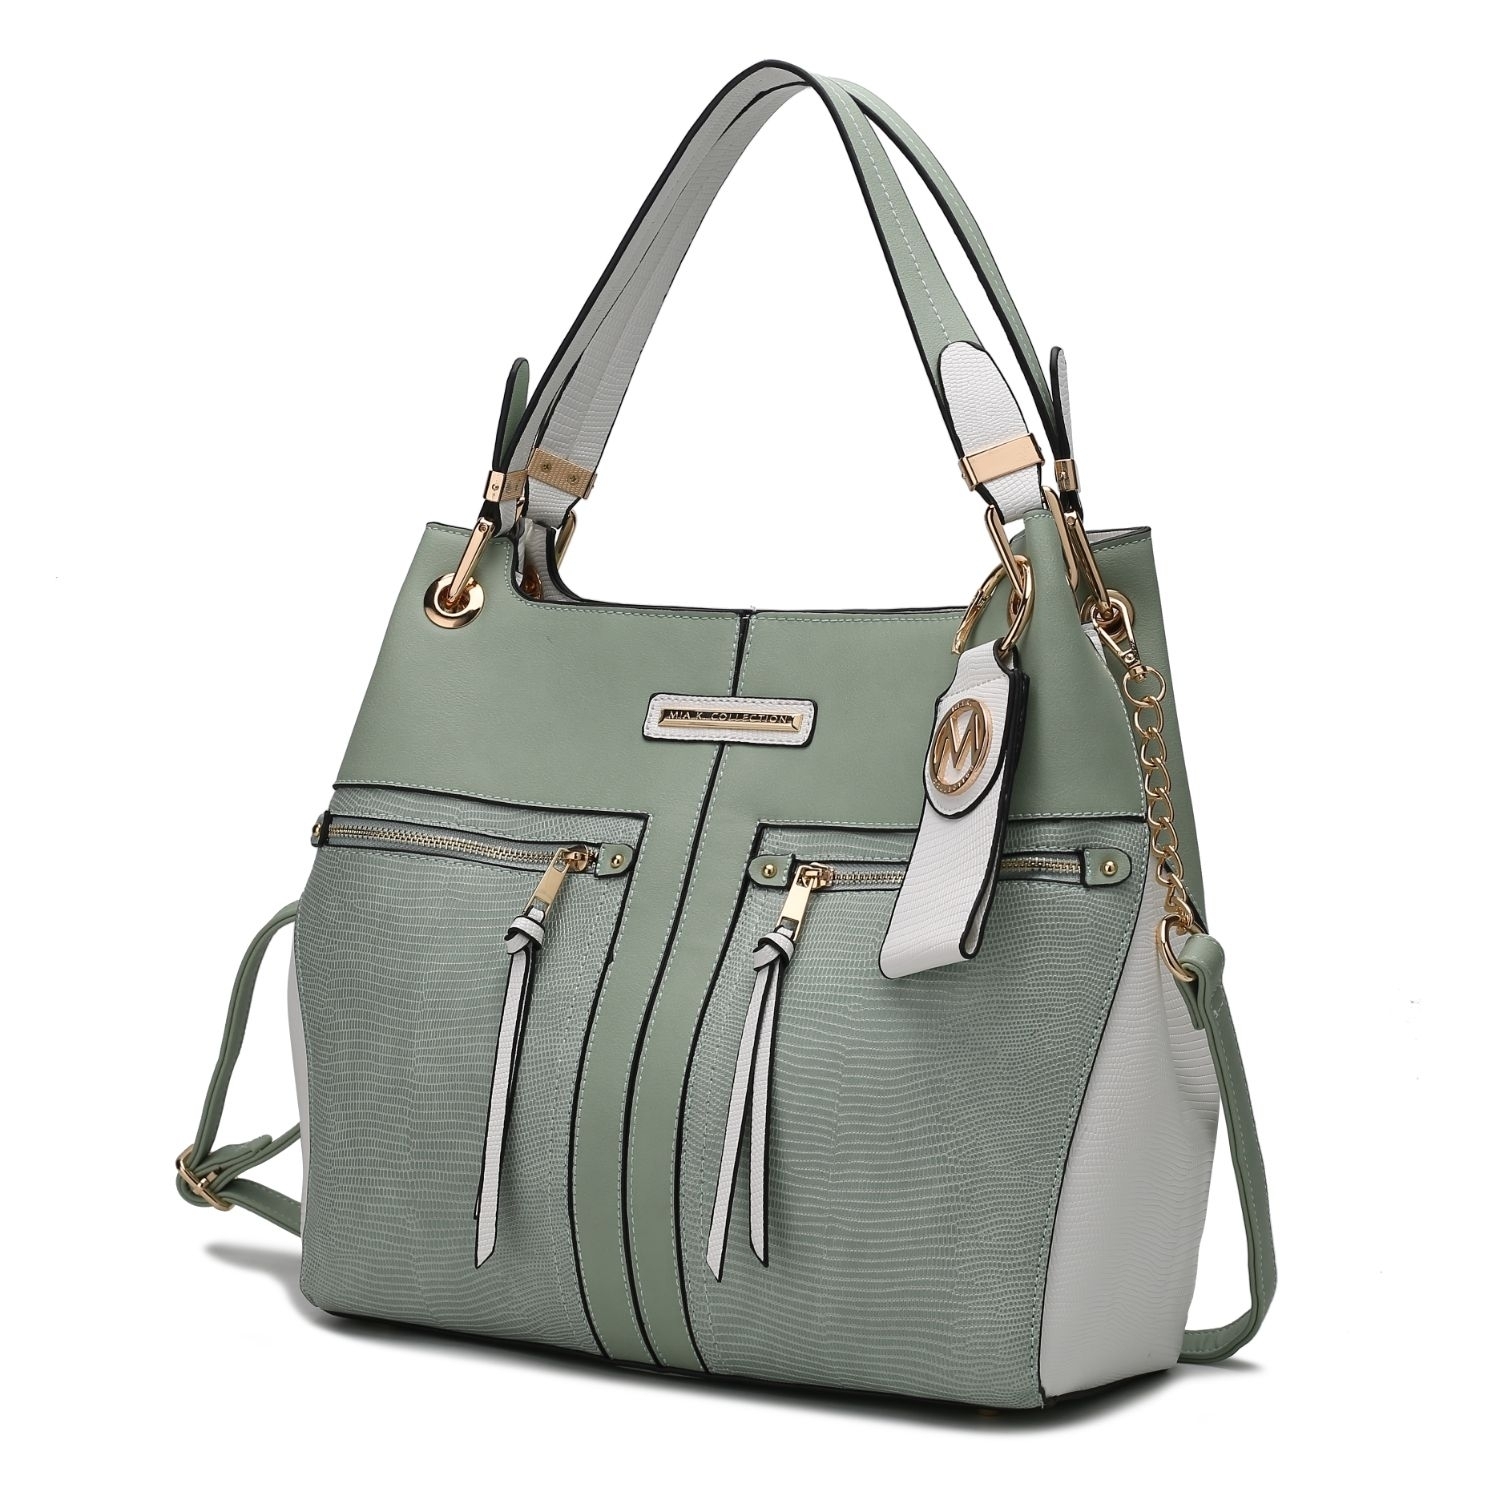 MKF Collection Sofia Tote 2 Pcs Handbag With Keyring By Mia K. - Seafoam